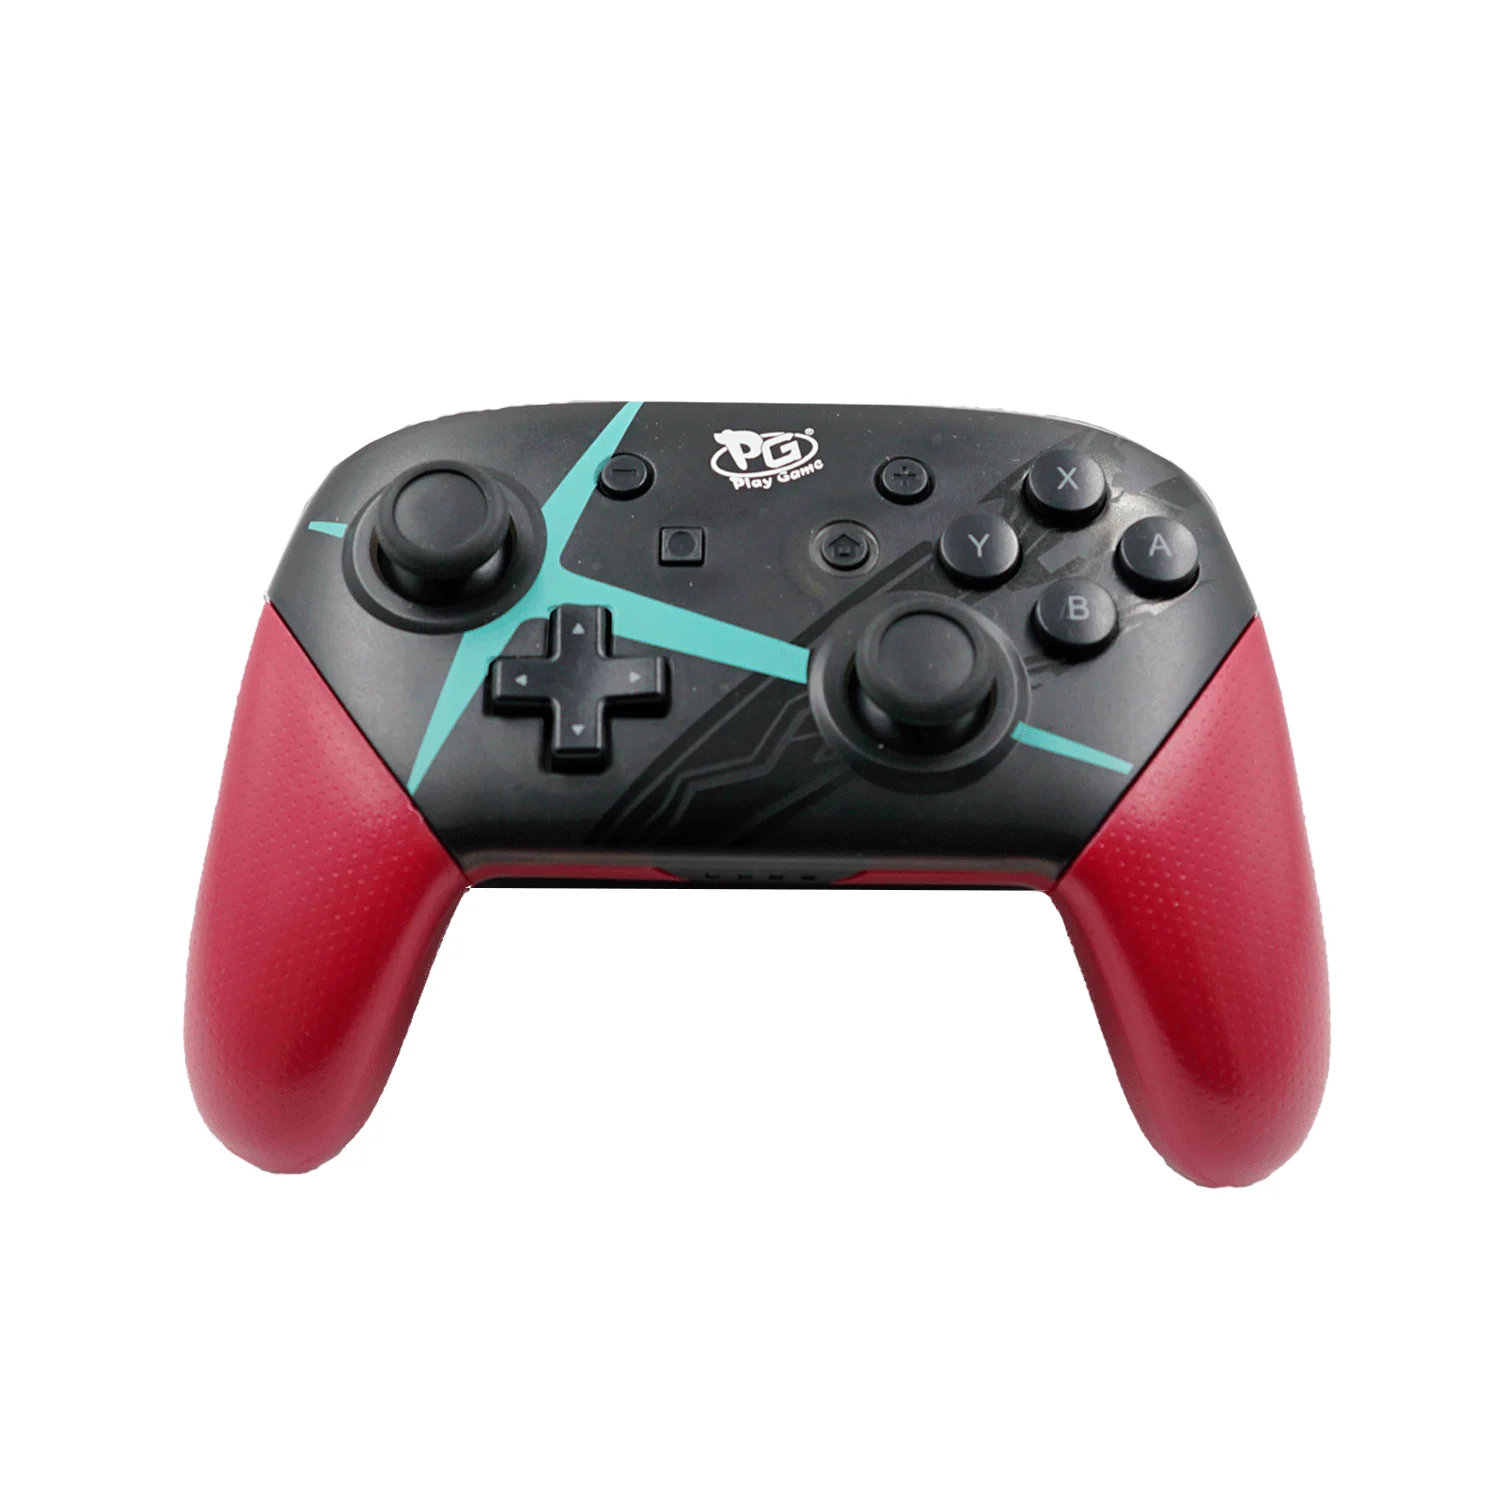 Controle Nintendo Switch Pro Play Game - Xenoblade 2 Edition